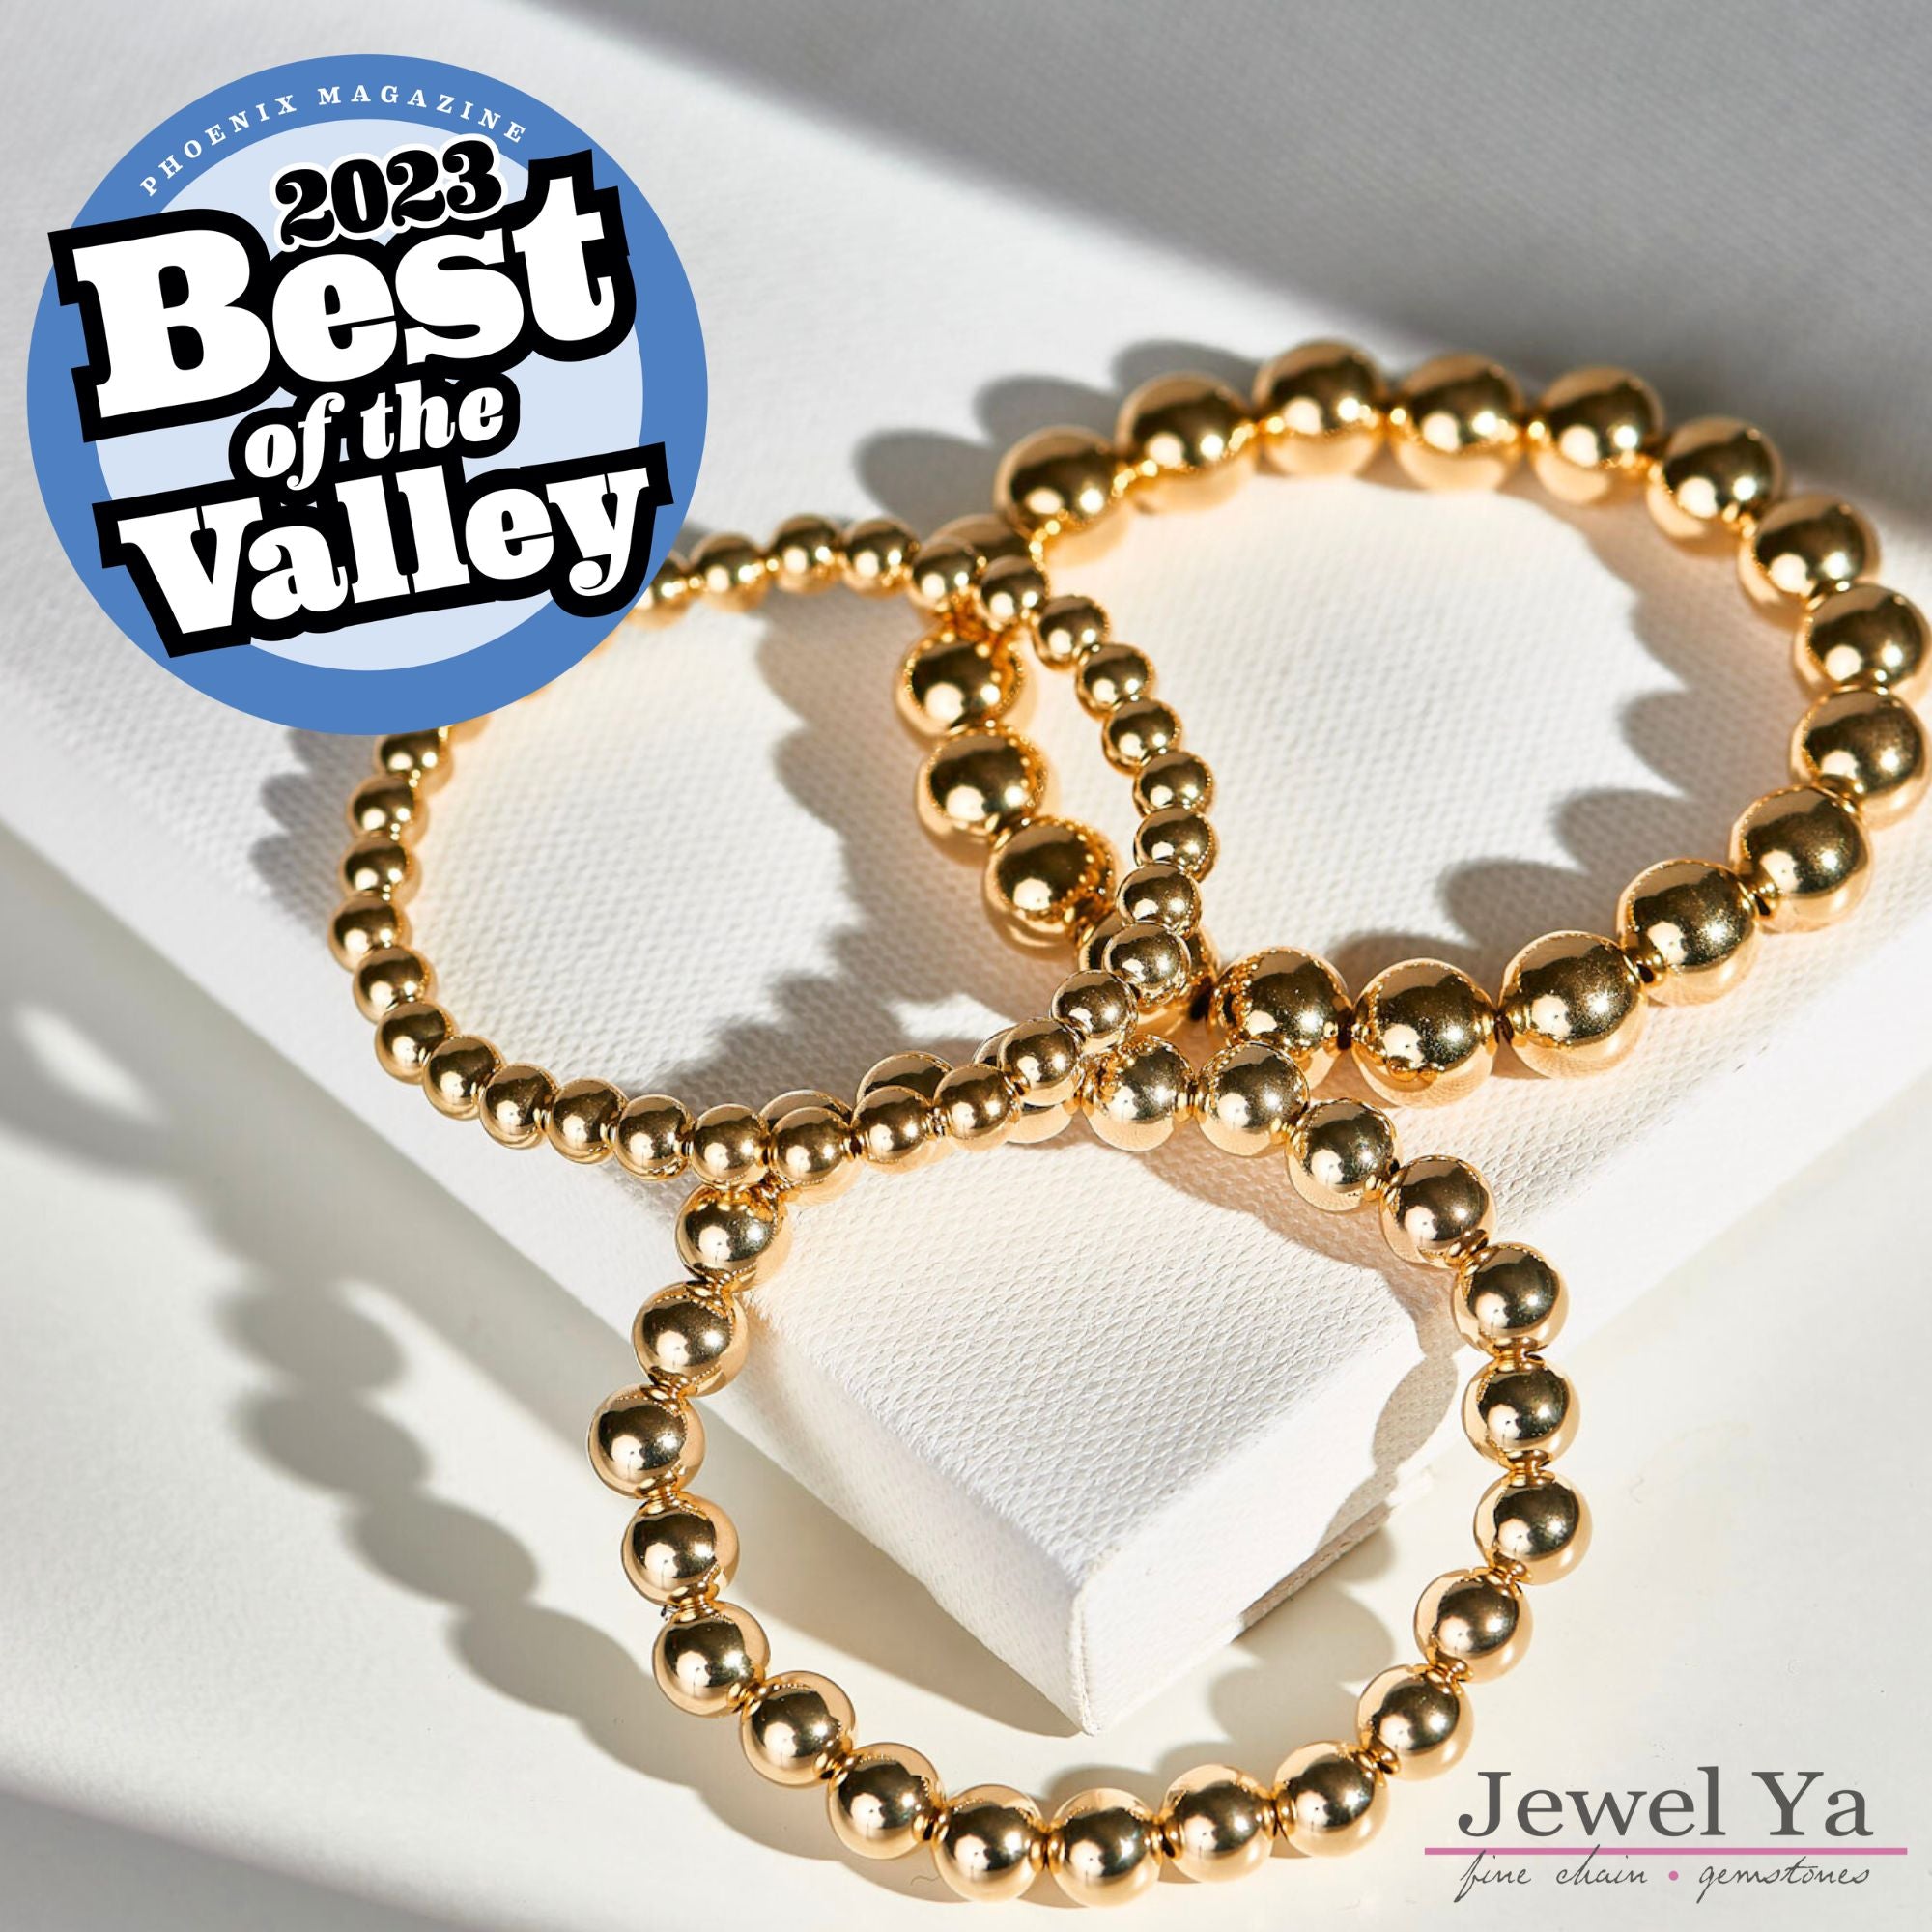 8mm Sterling Silver & 14k Gold Filled Bracelet - Jewel Ya